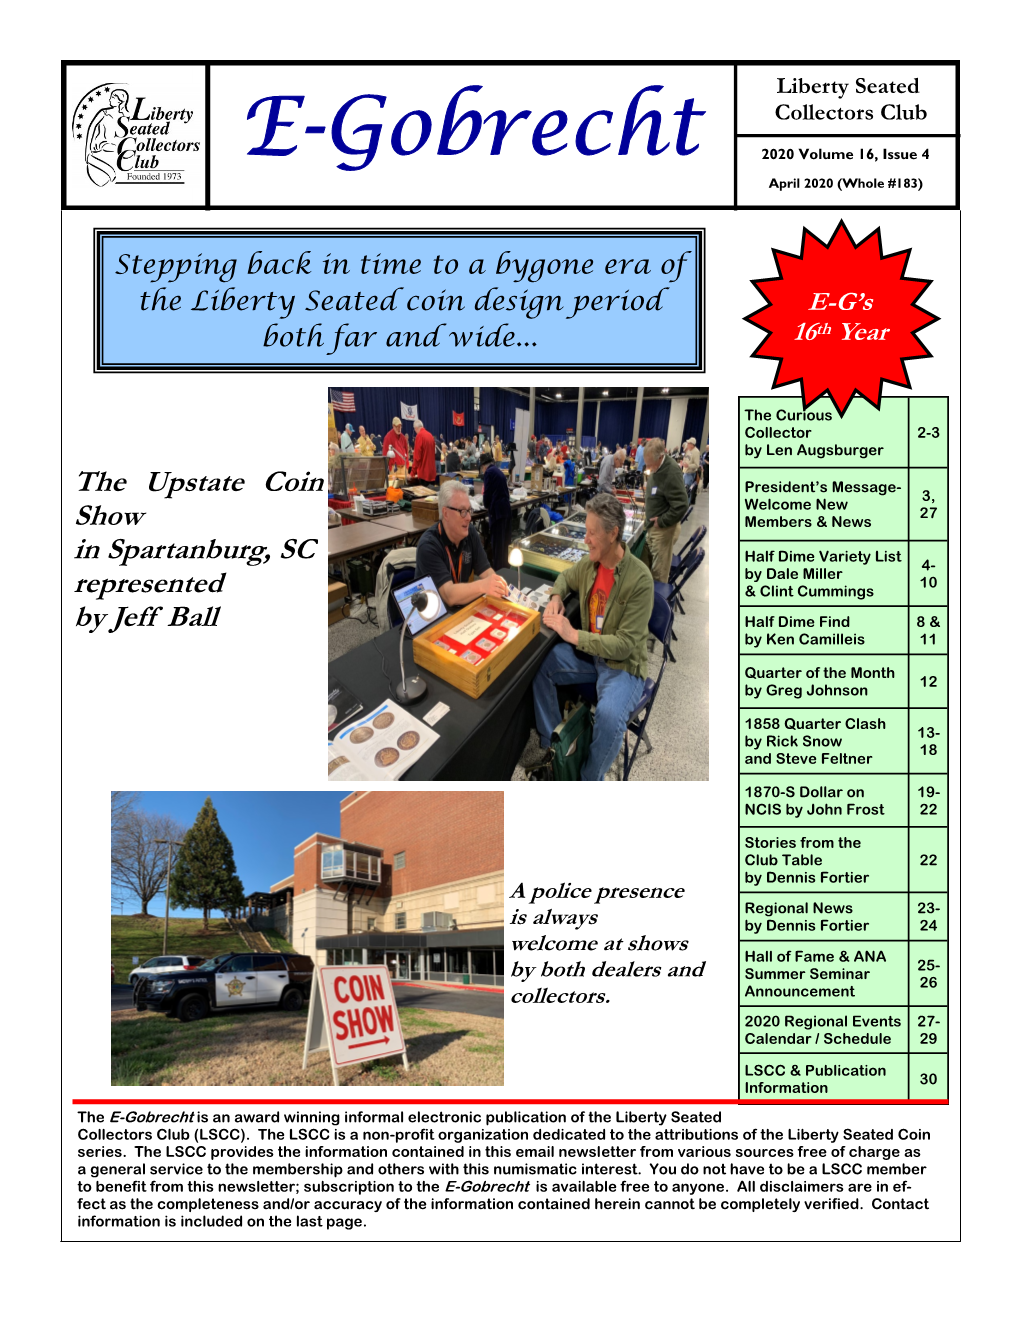 E-Gobrecht 2020 Volume 16, Issue 4 April 2020 (Whole #183)